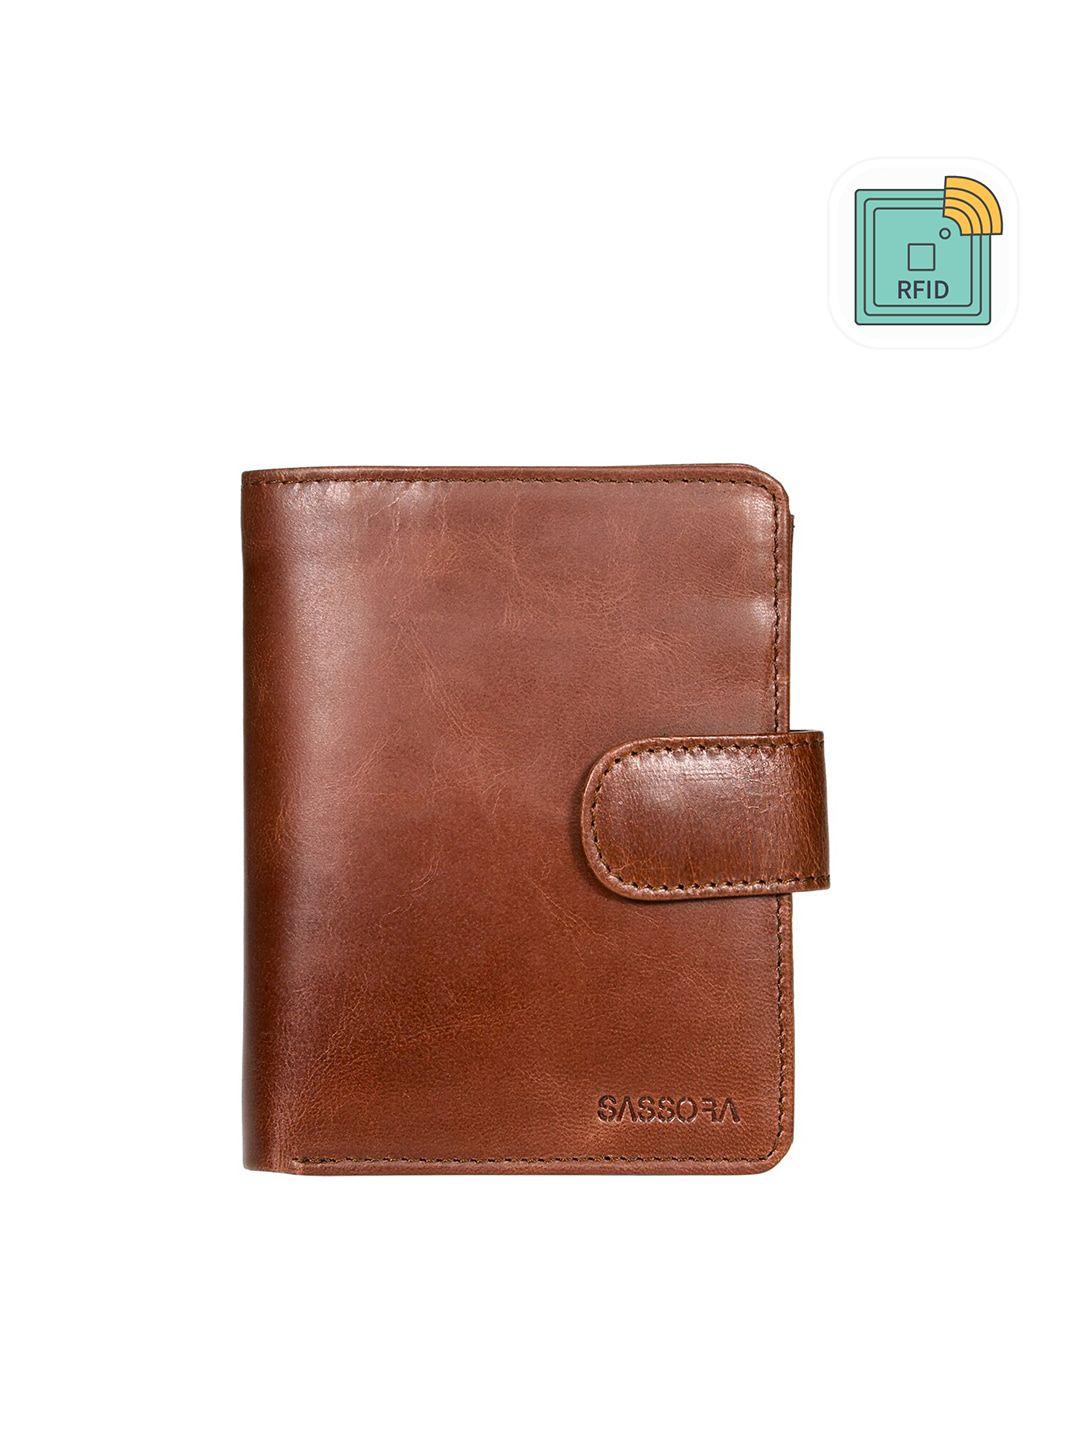 sassora men brown leather two fold wallet